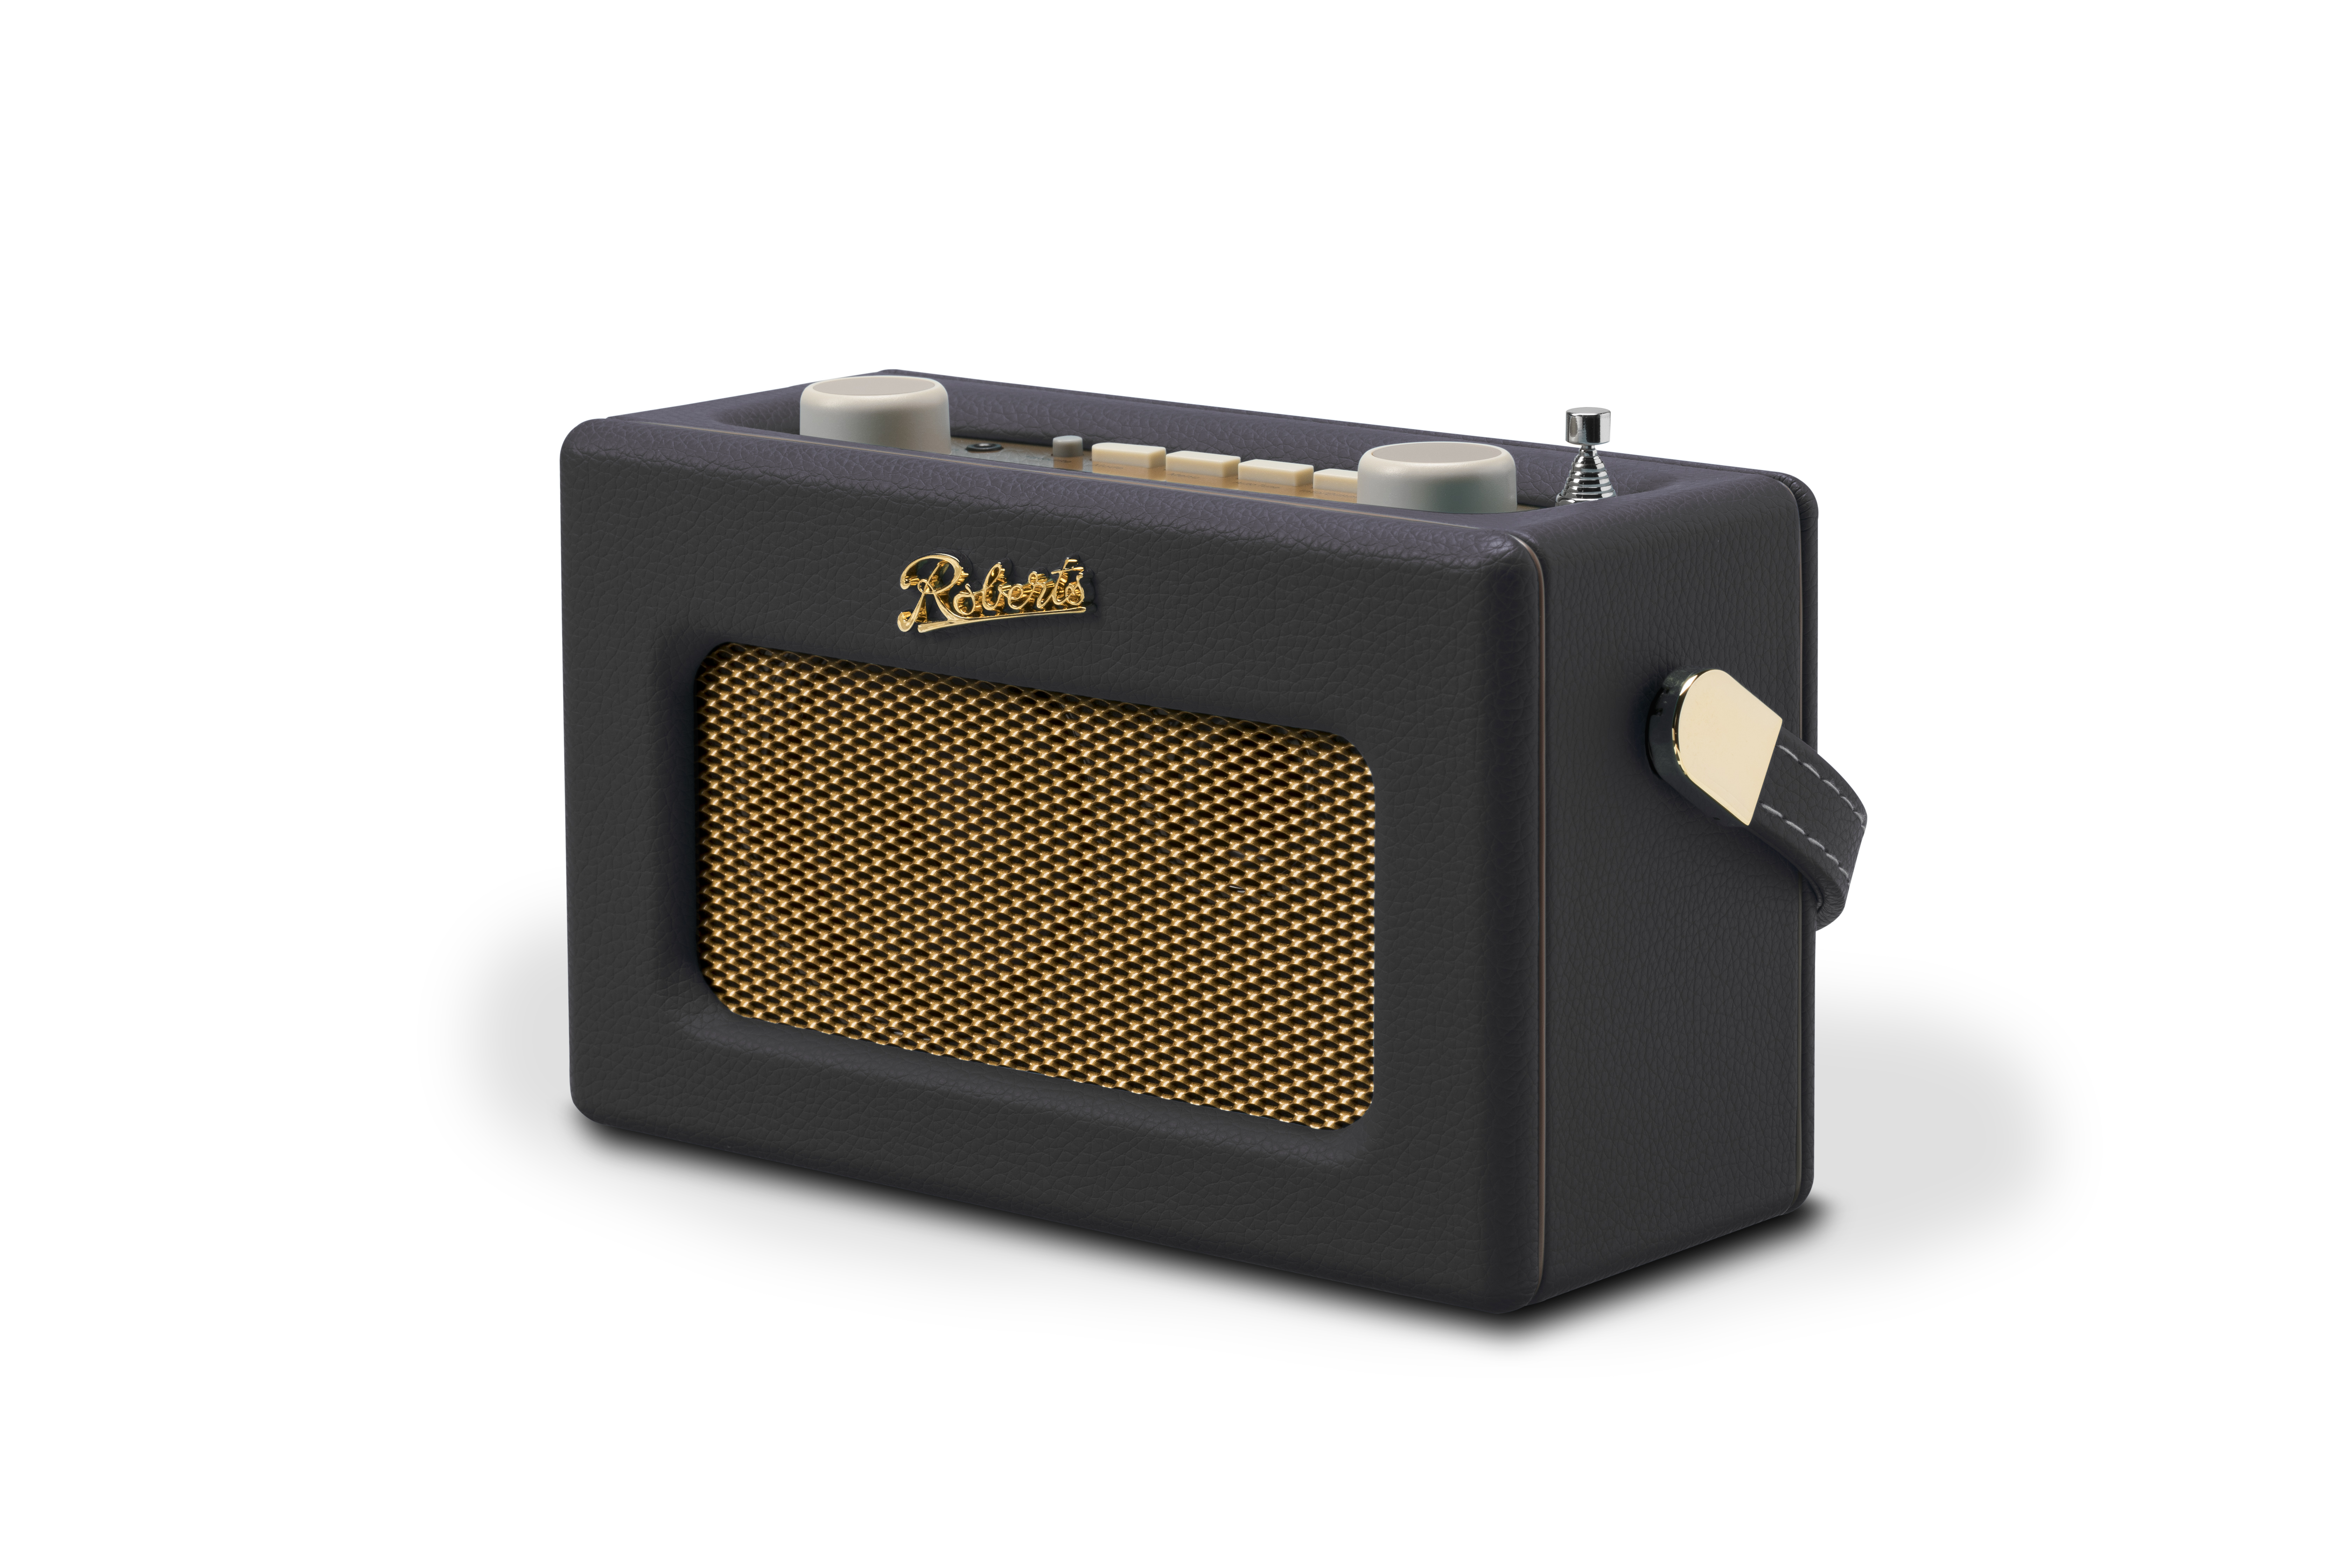 BT ROBERTS | Schwarz mit Revival tragbares black Bluetooth RADIO DAB+, | Uno Digitalradio, Radio DAB+/FM